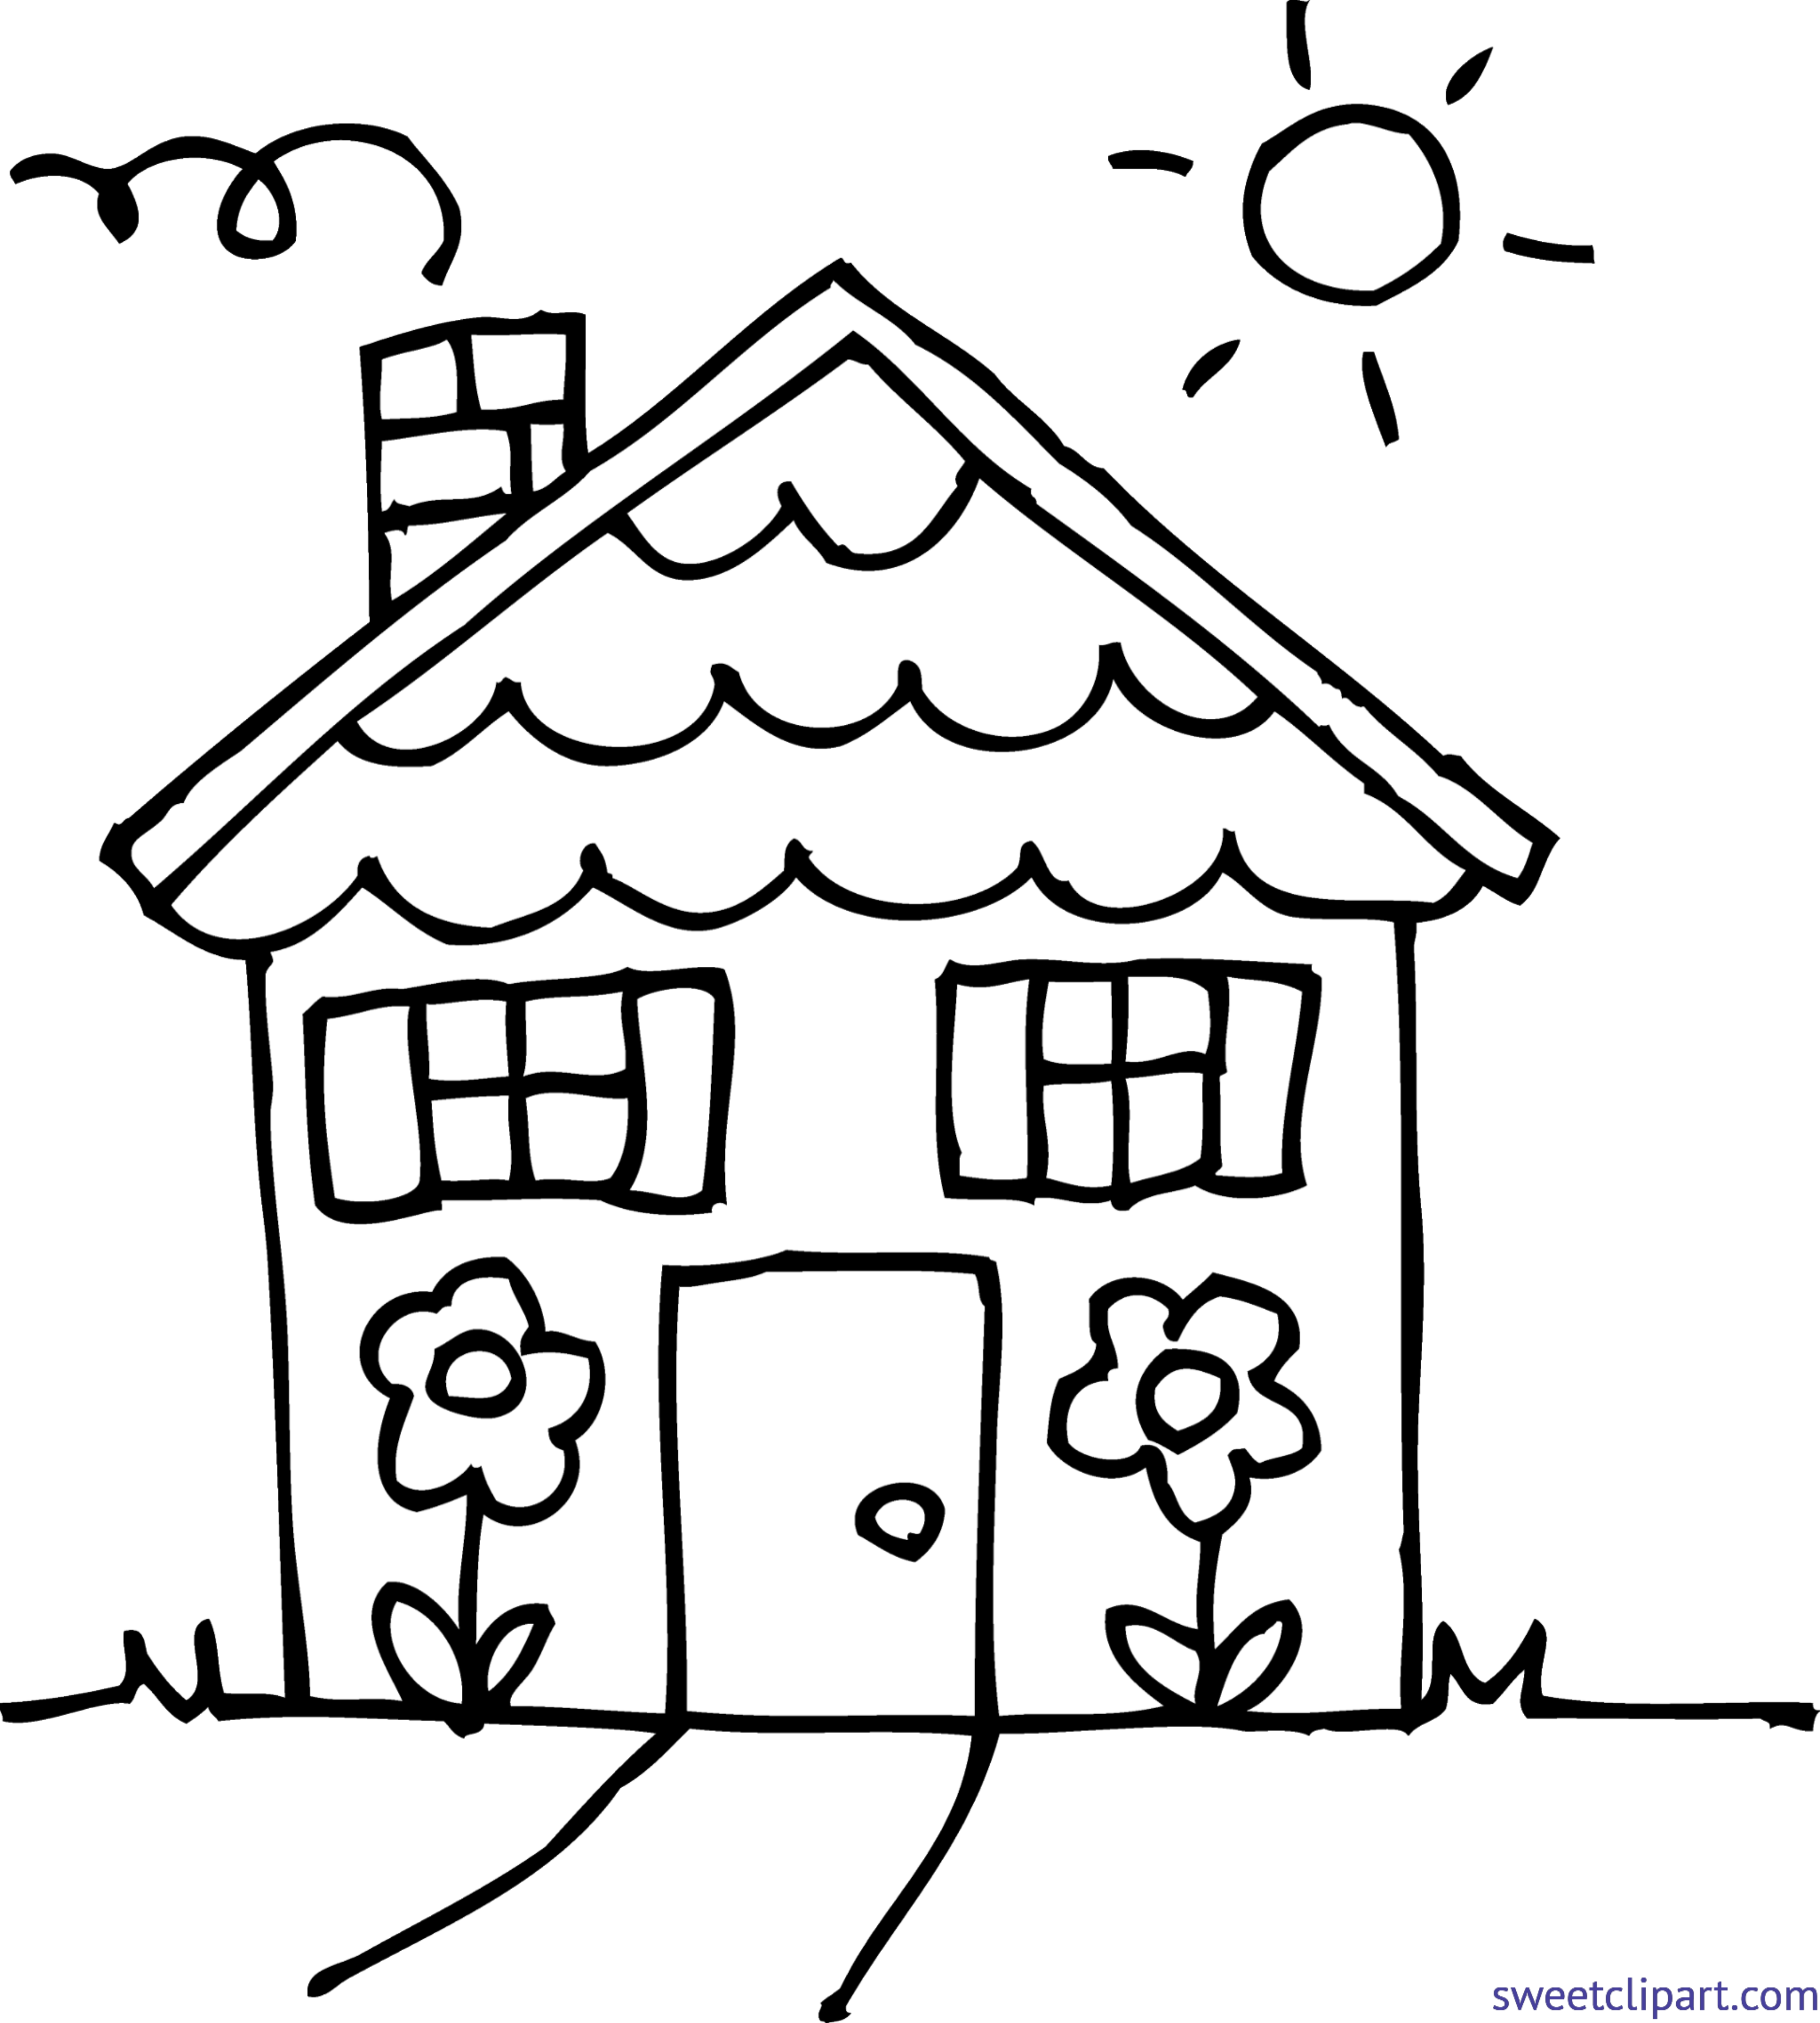 Farmhouse clipart village school. House line drawing clip